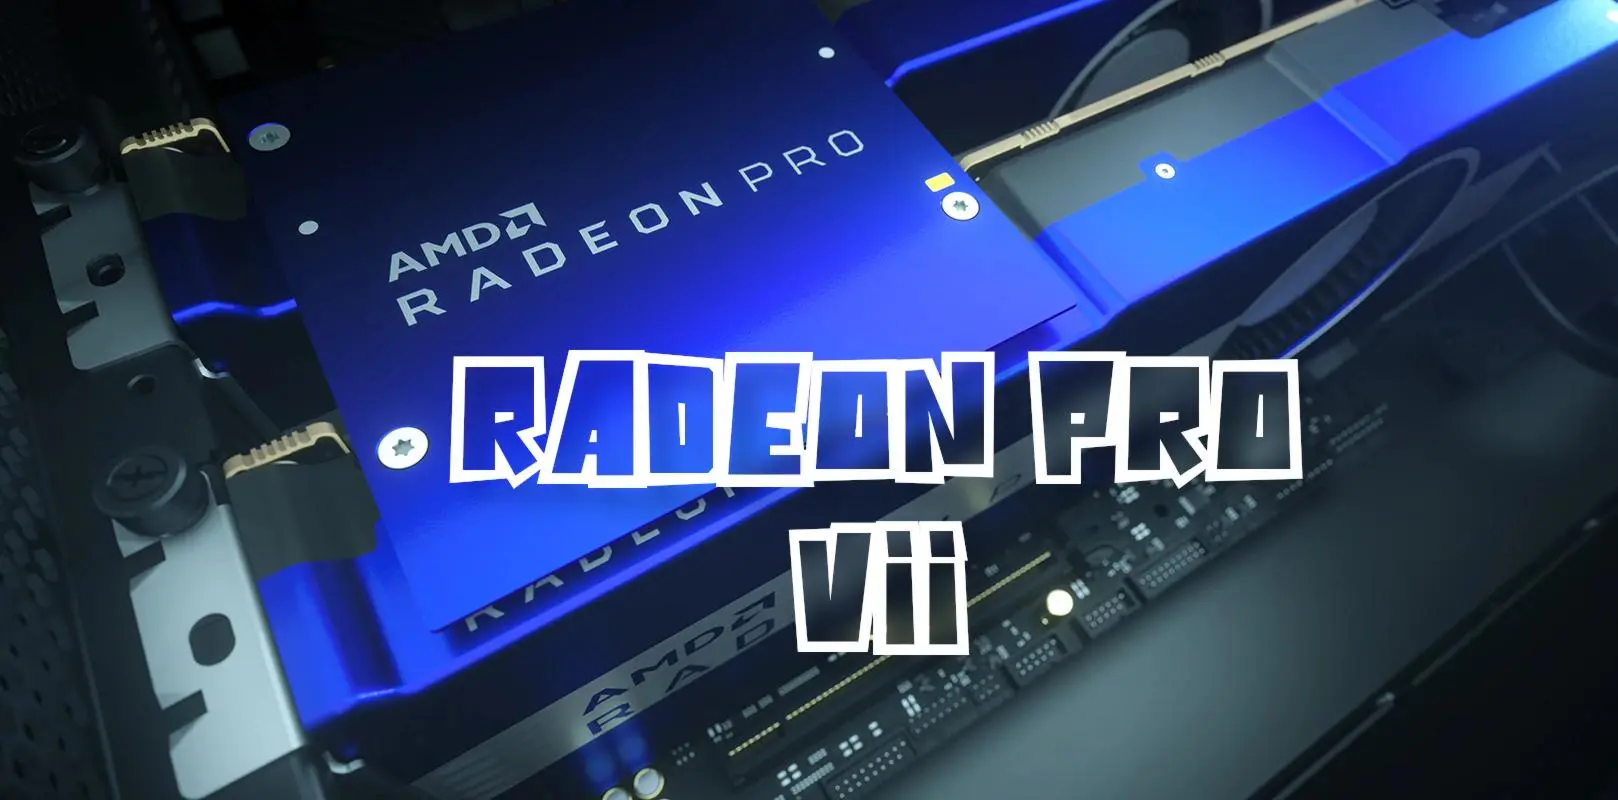 AMD Radeon Pro VII - une carte Pro avec un prix agressif